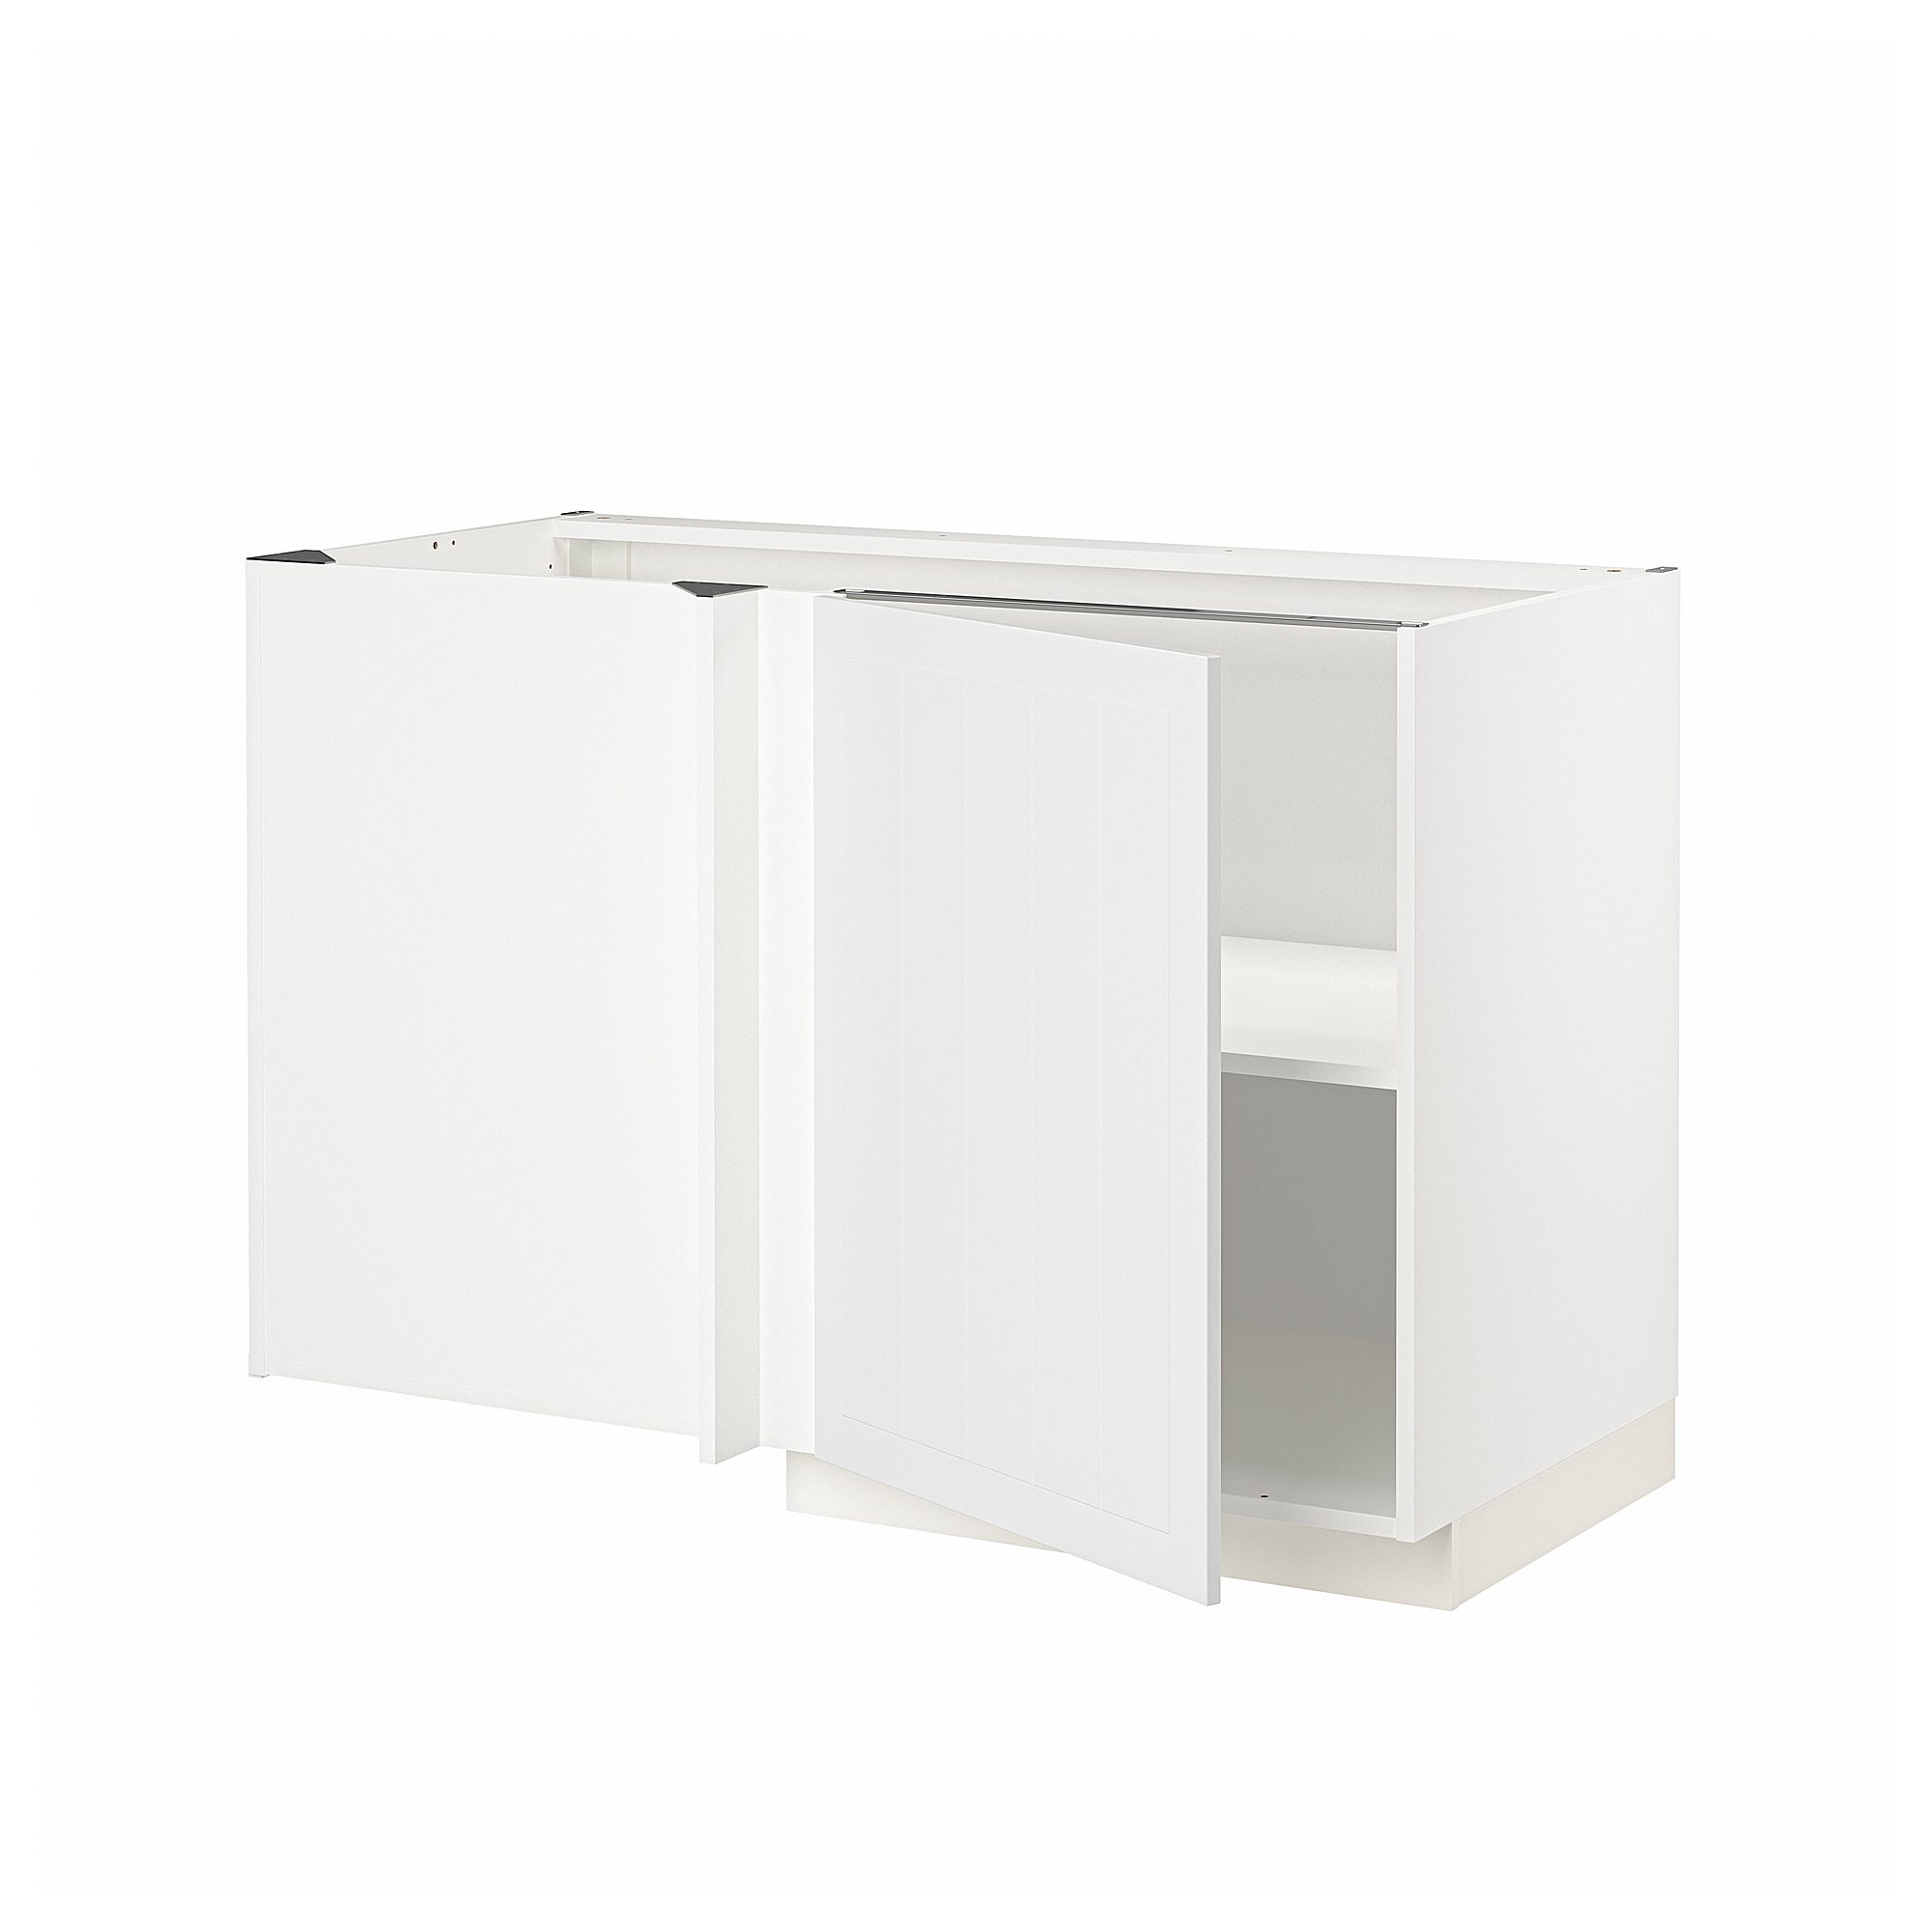 METOD corner base cabinet with shelf